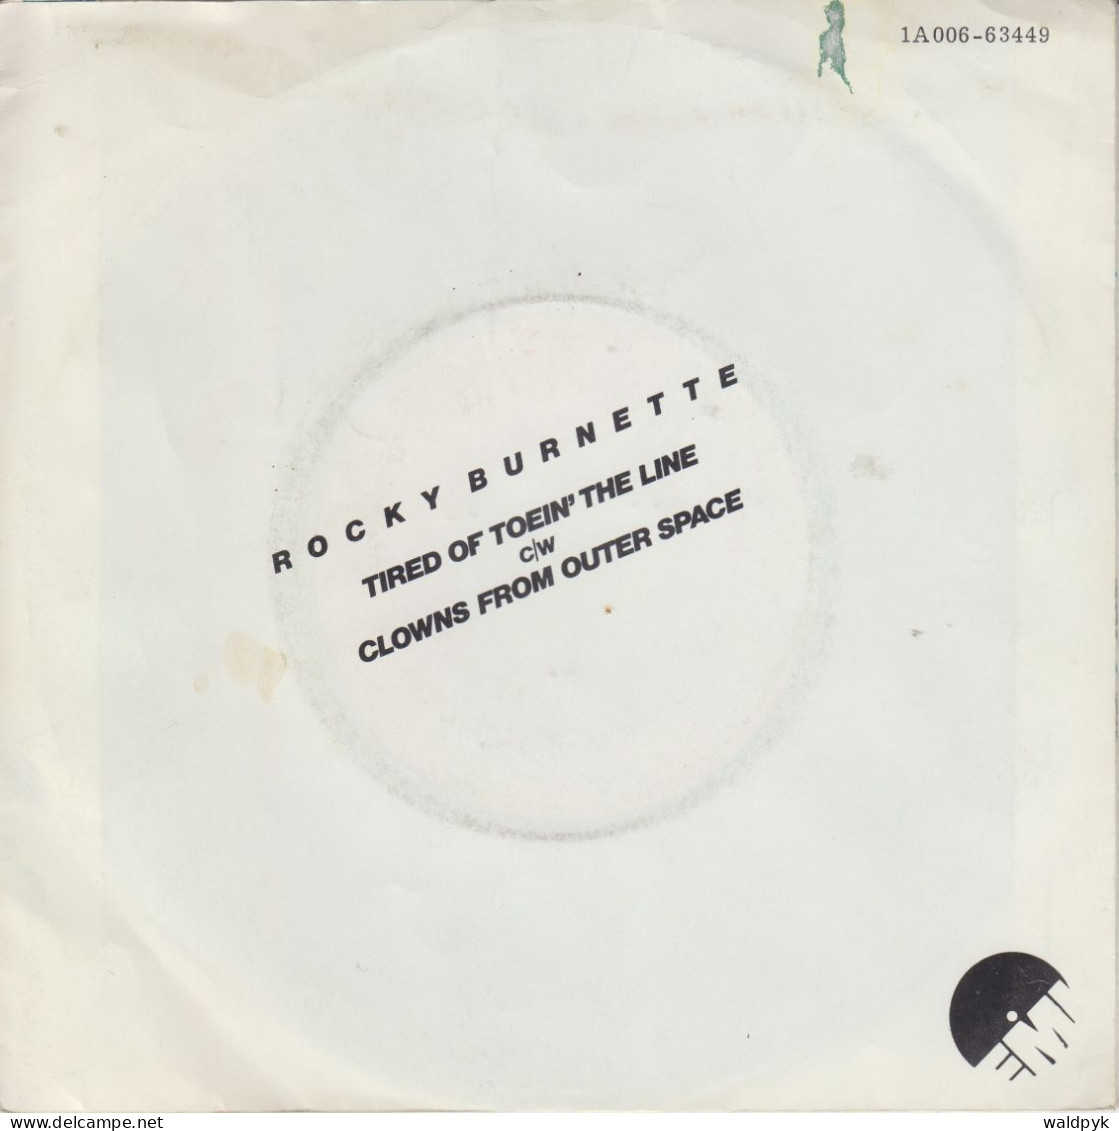 ROCKY BURNETTE - Tired Of Toein' The Line - Sonstige - Englische Musik